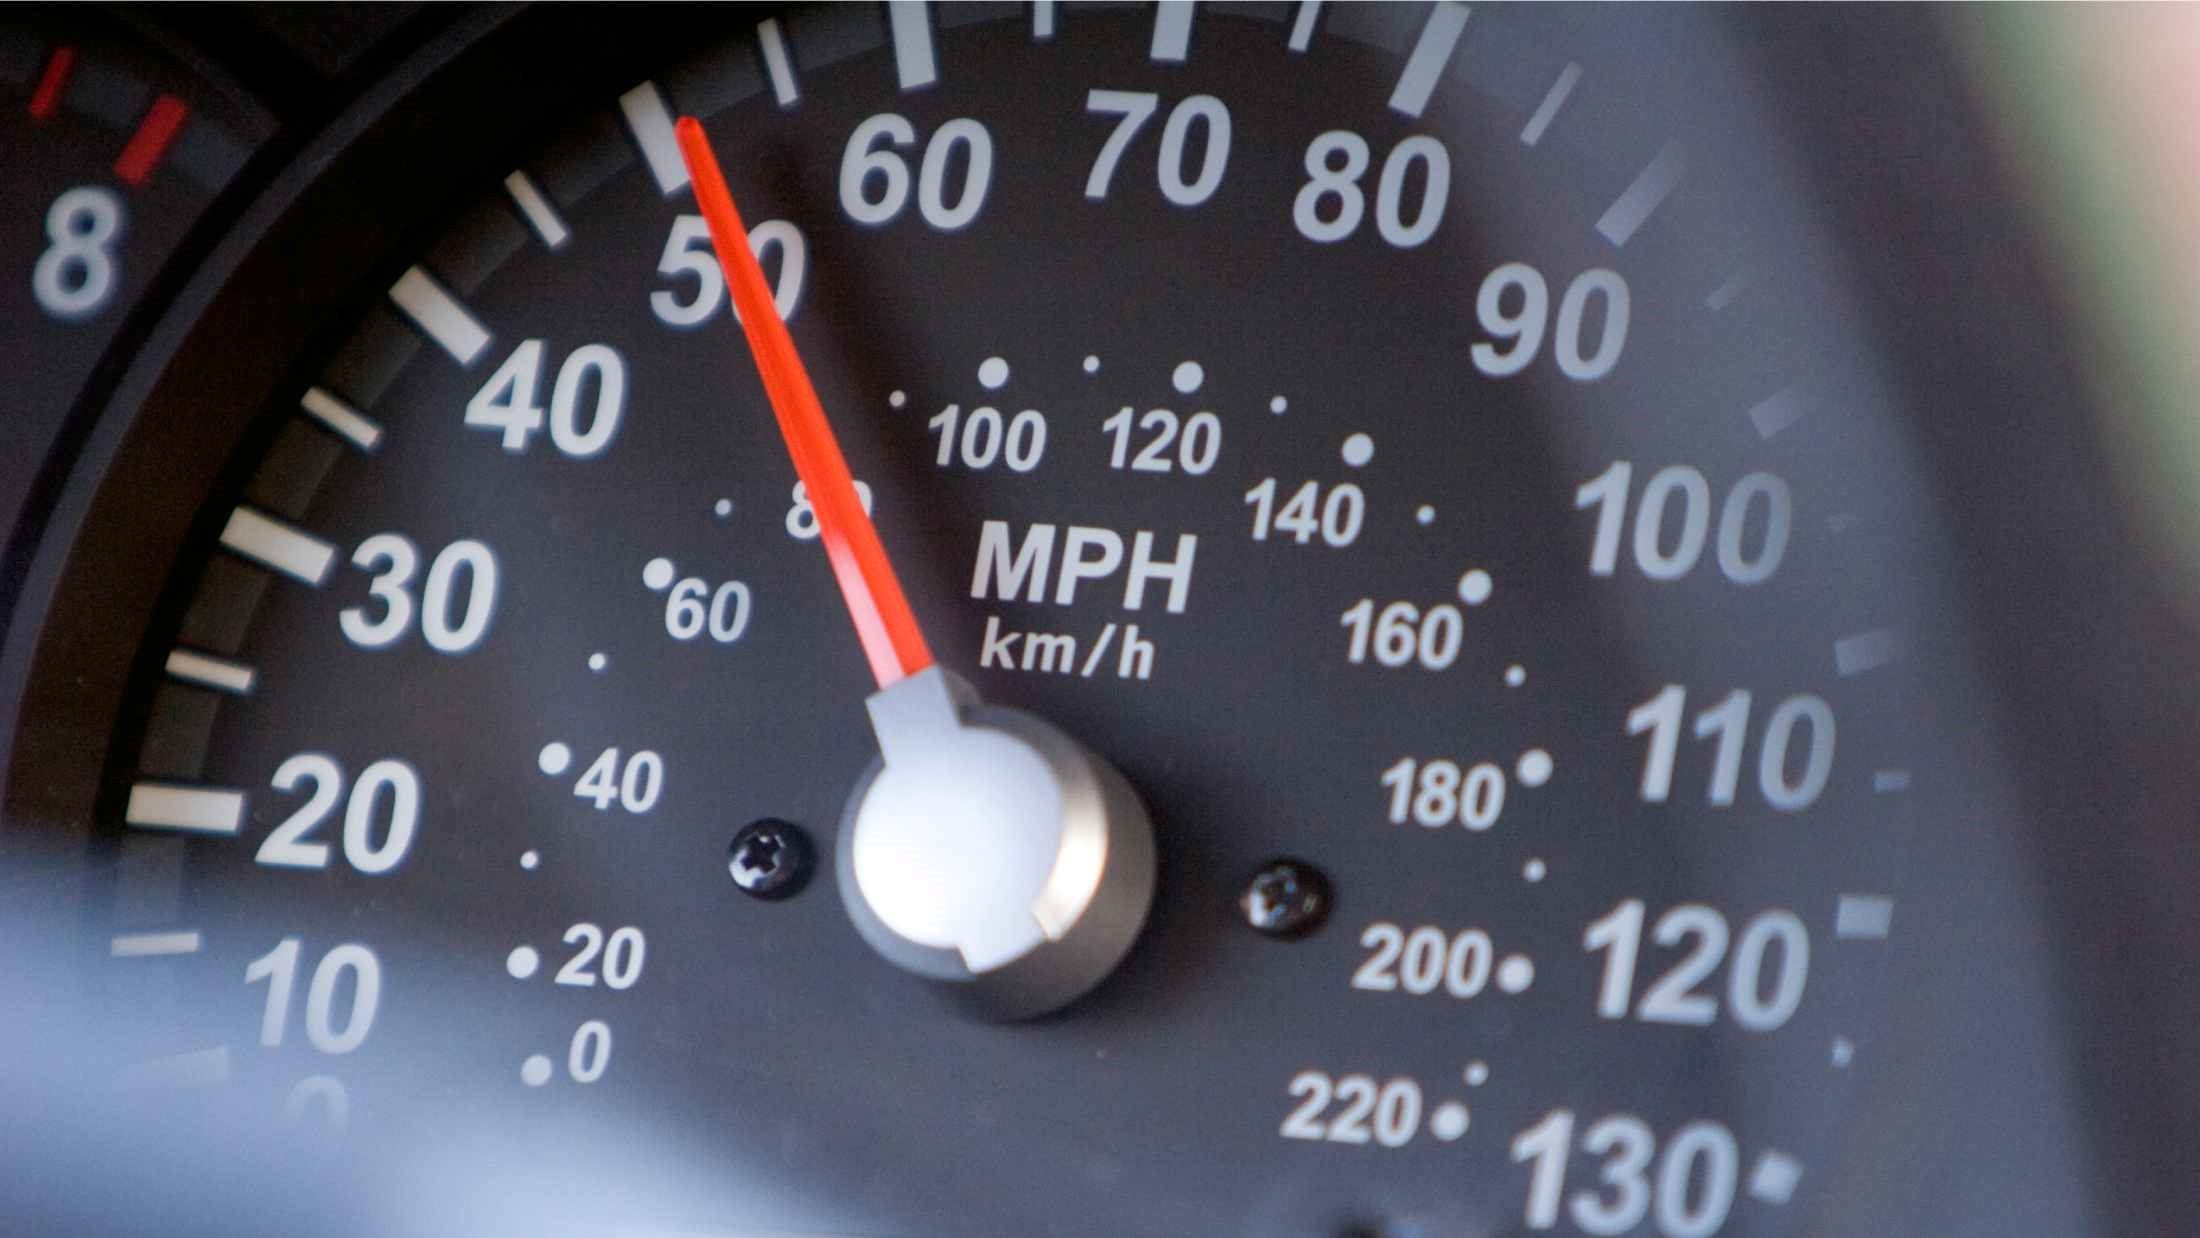 A speedometer registering 50 miles per hour